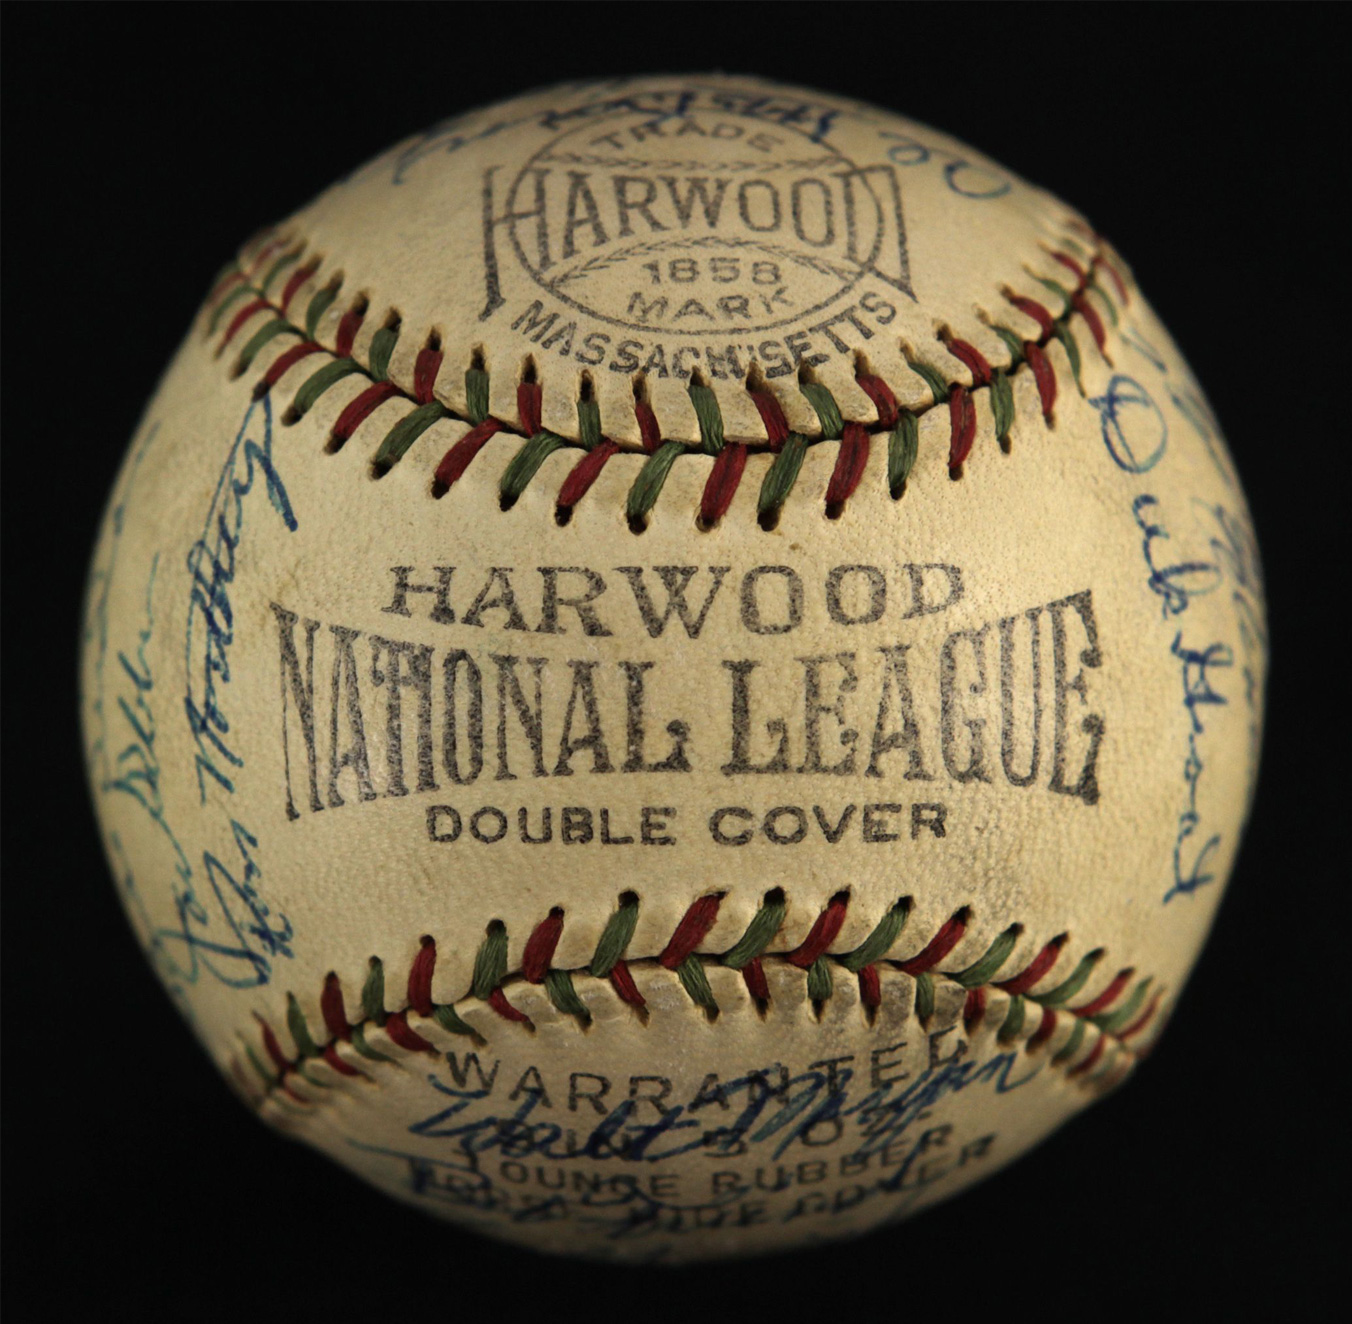 1961 Pittsburgh Team Harwood National League Baseball